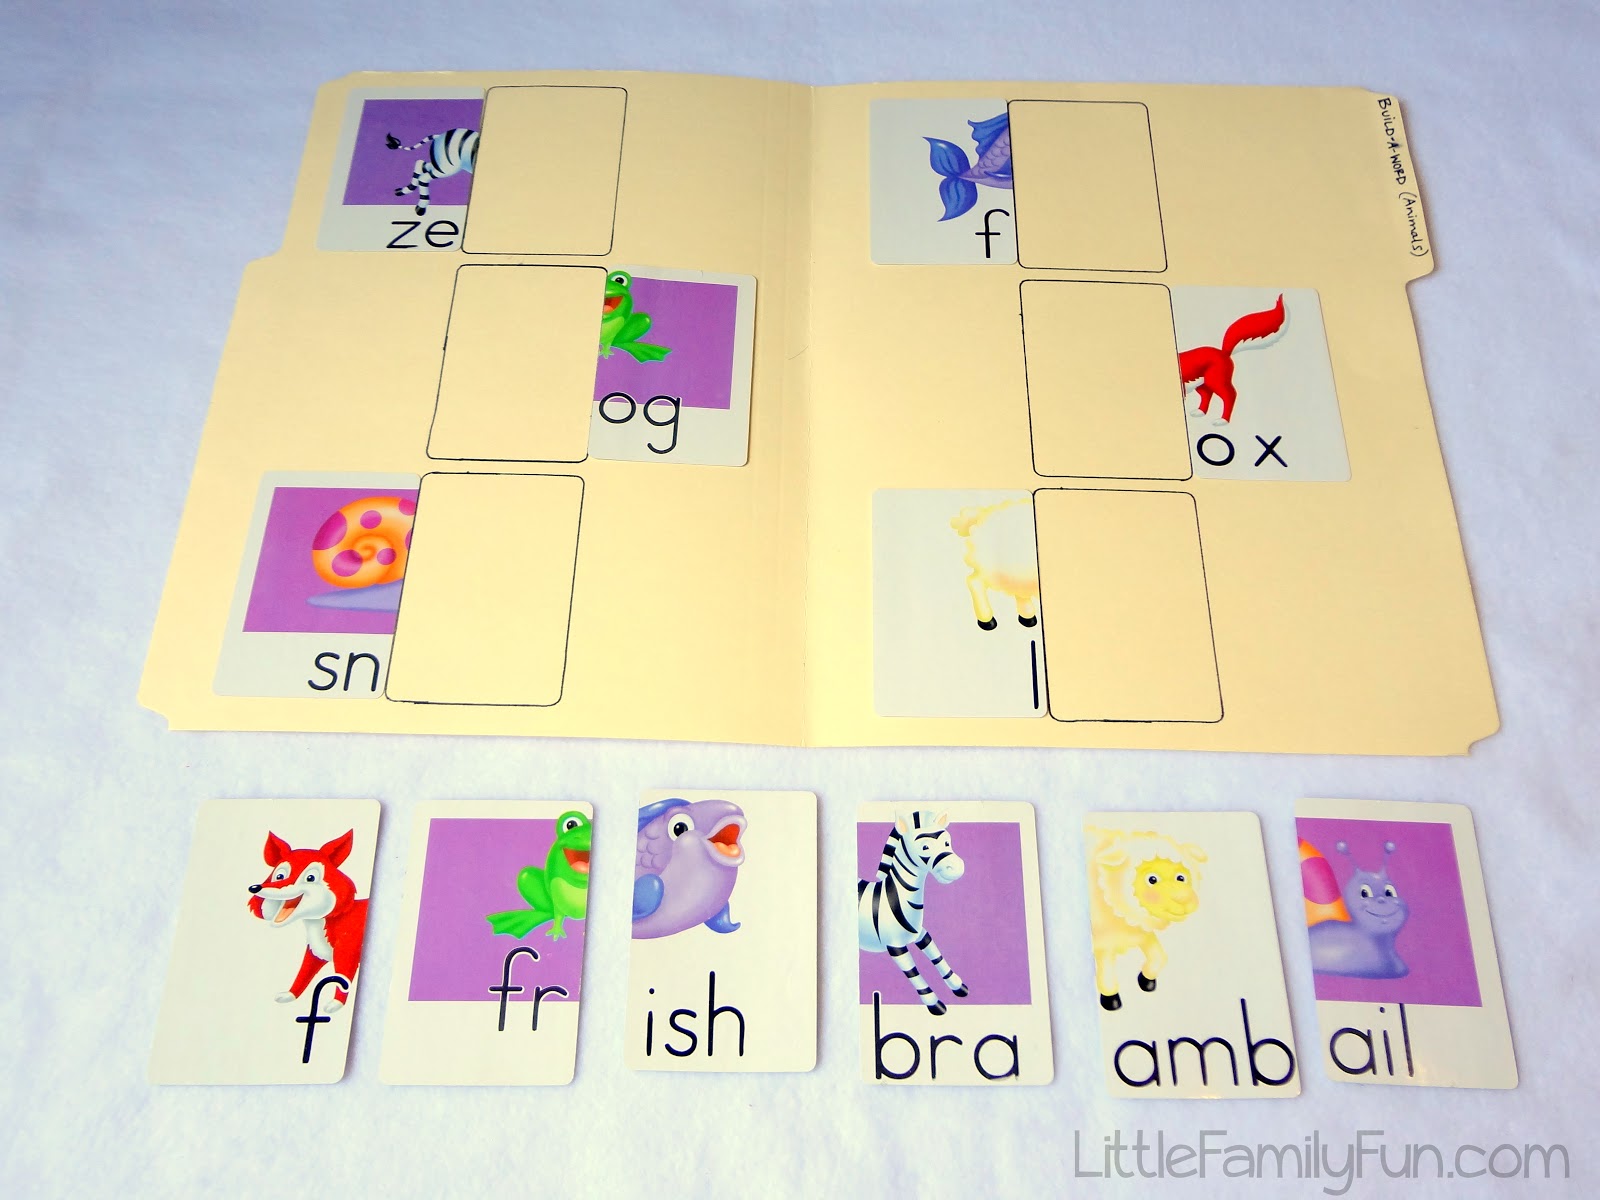 Little Family Fun: File-Folder Games: Flash Cards